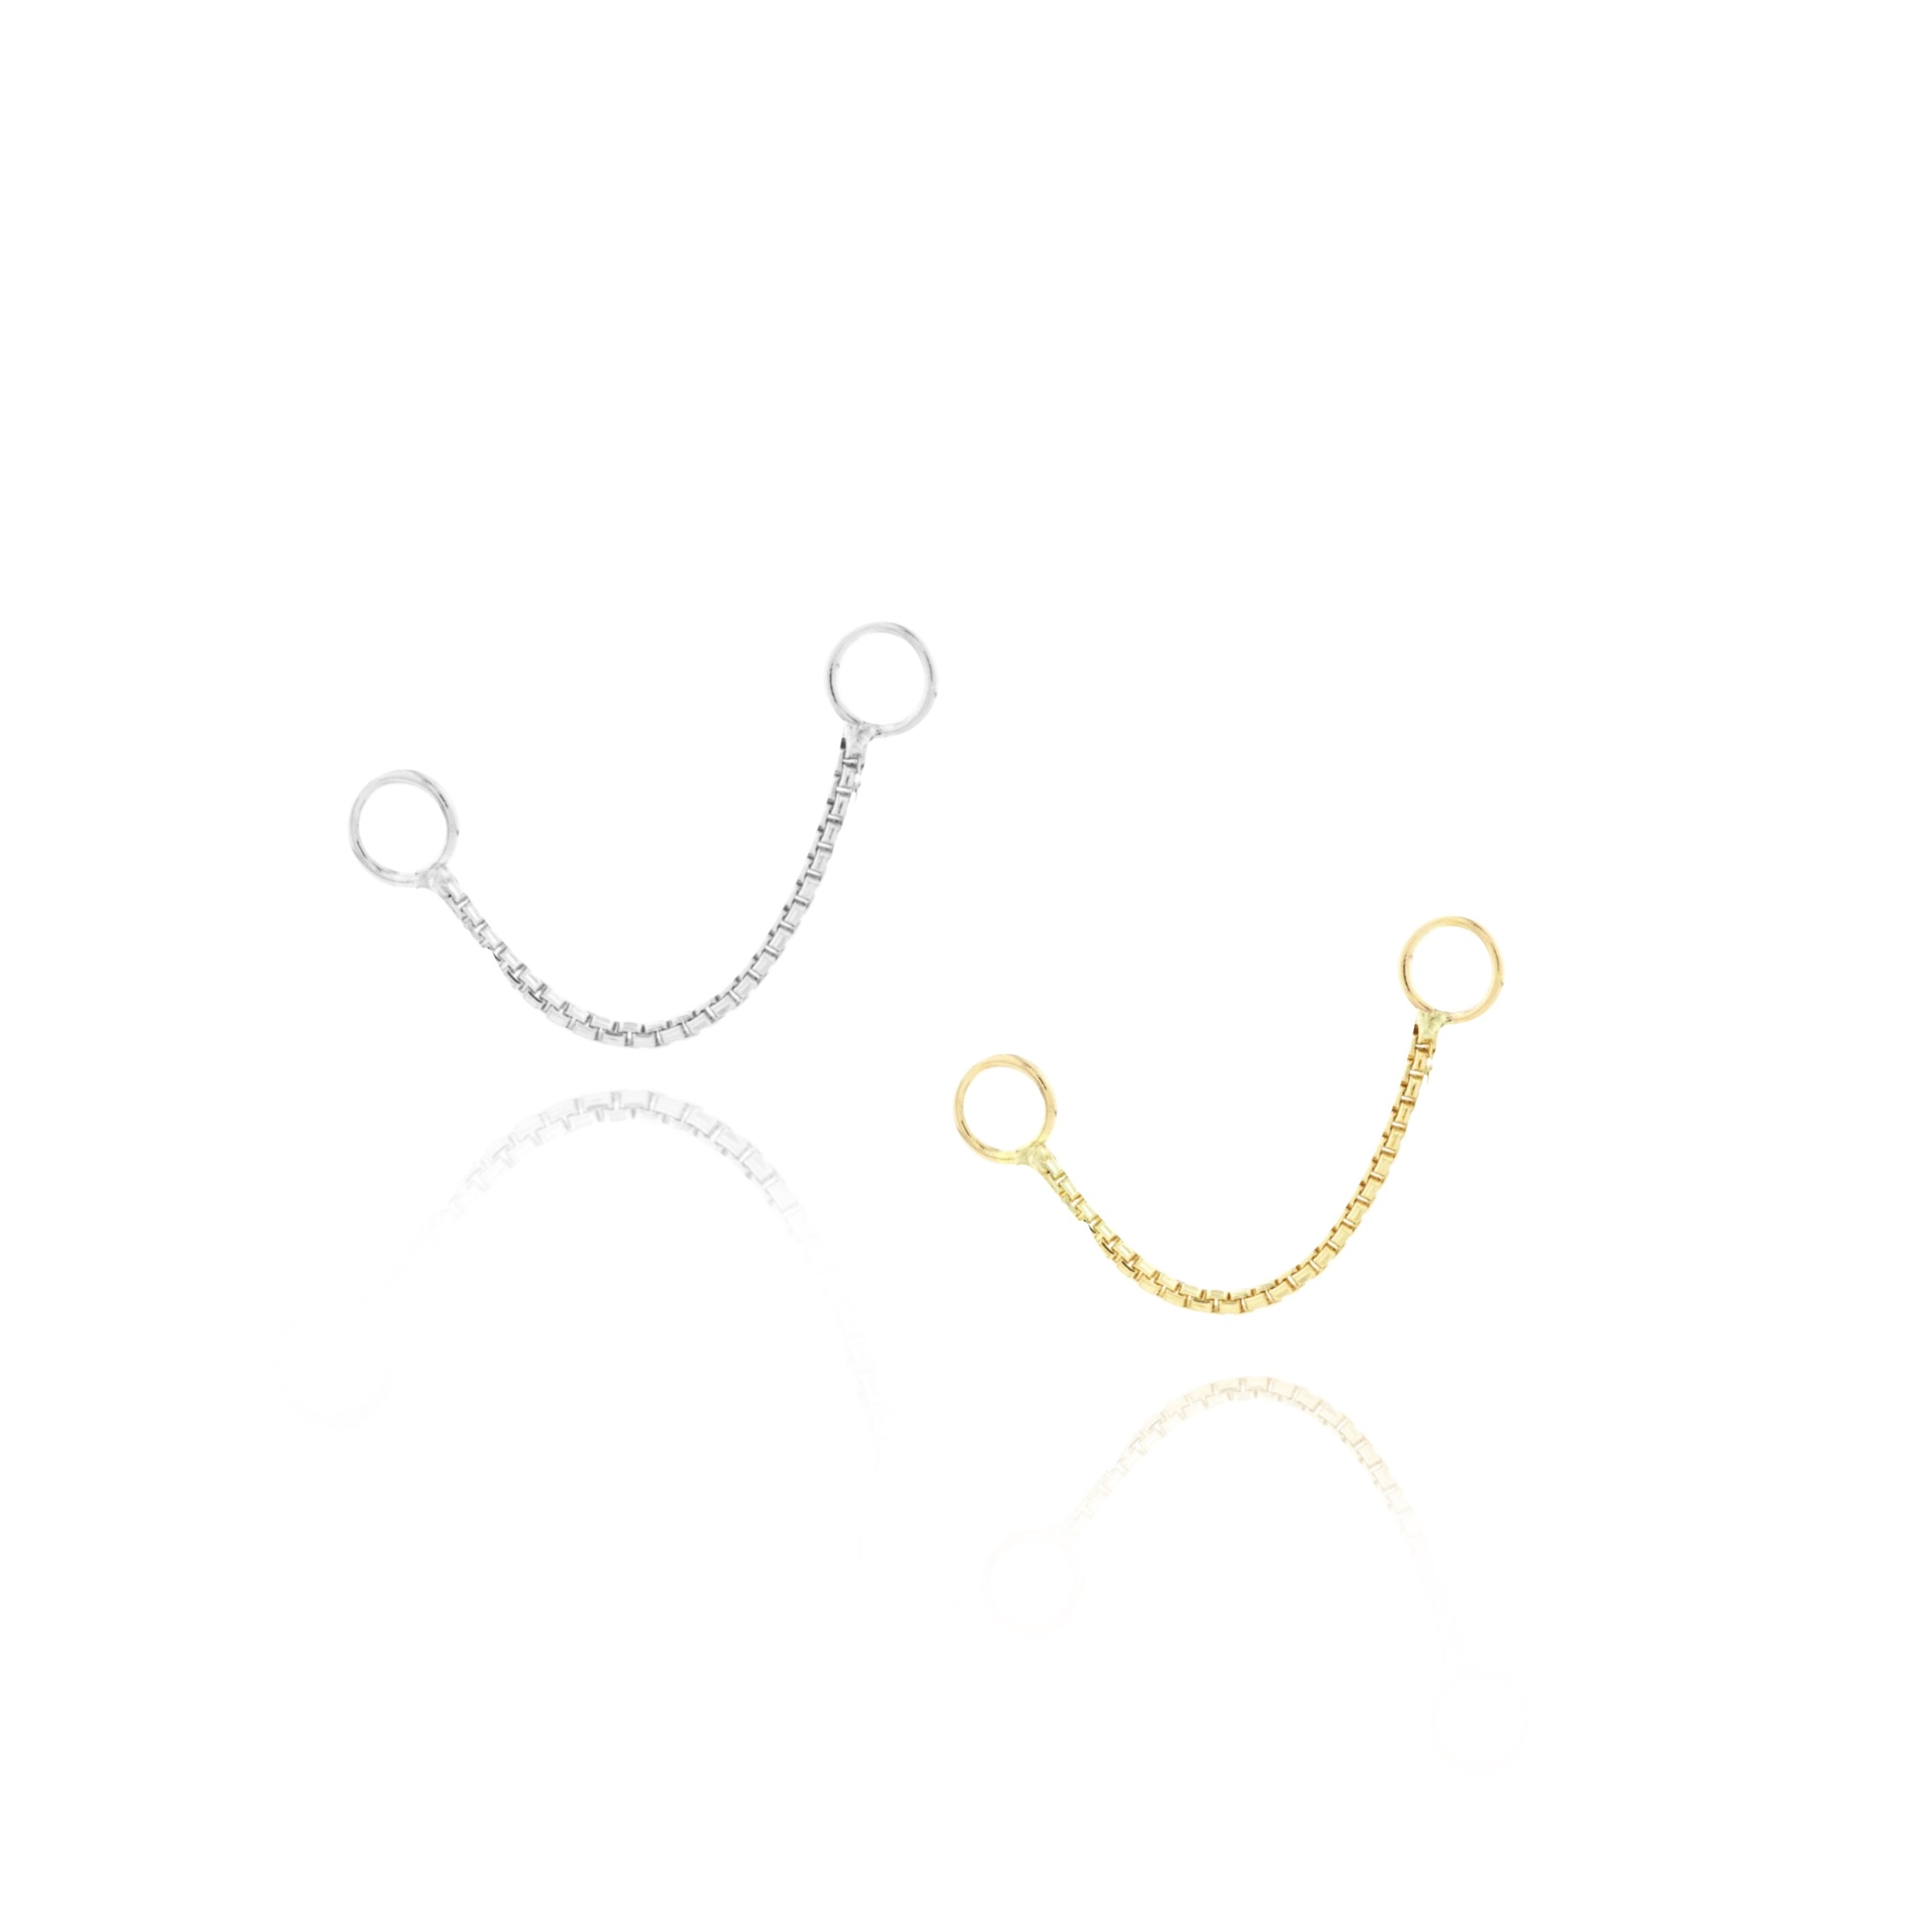 14kt Single Gold Piercing Chain - UnusualPiercingShop.com